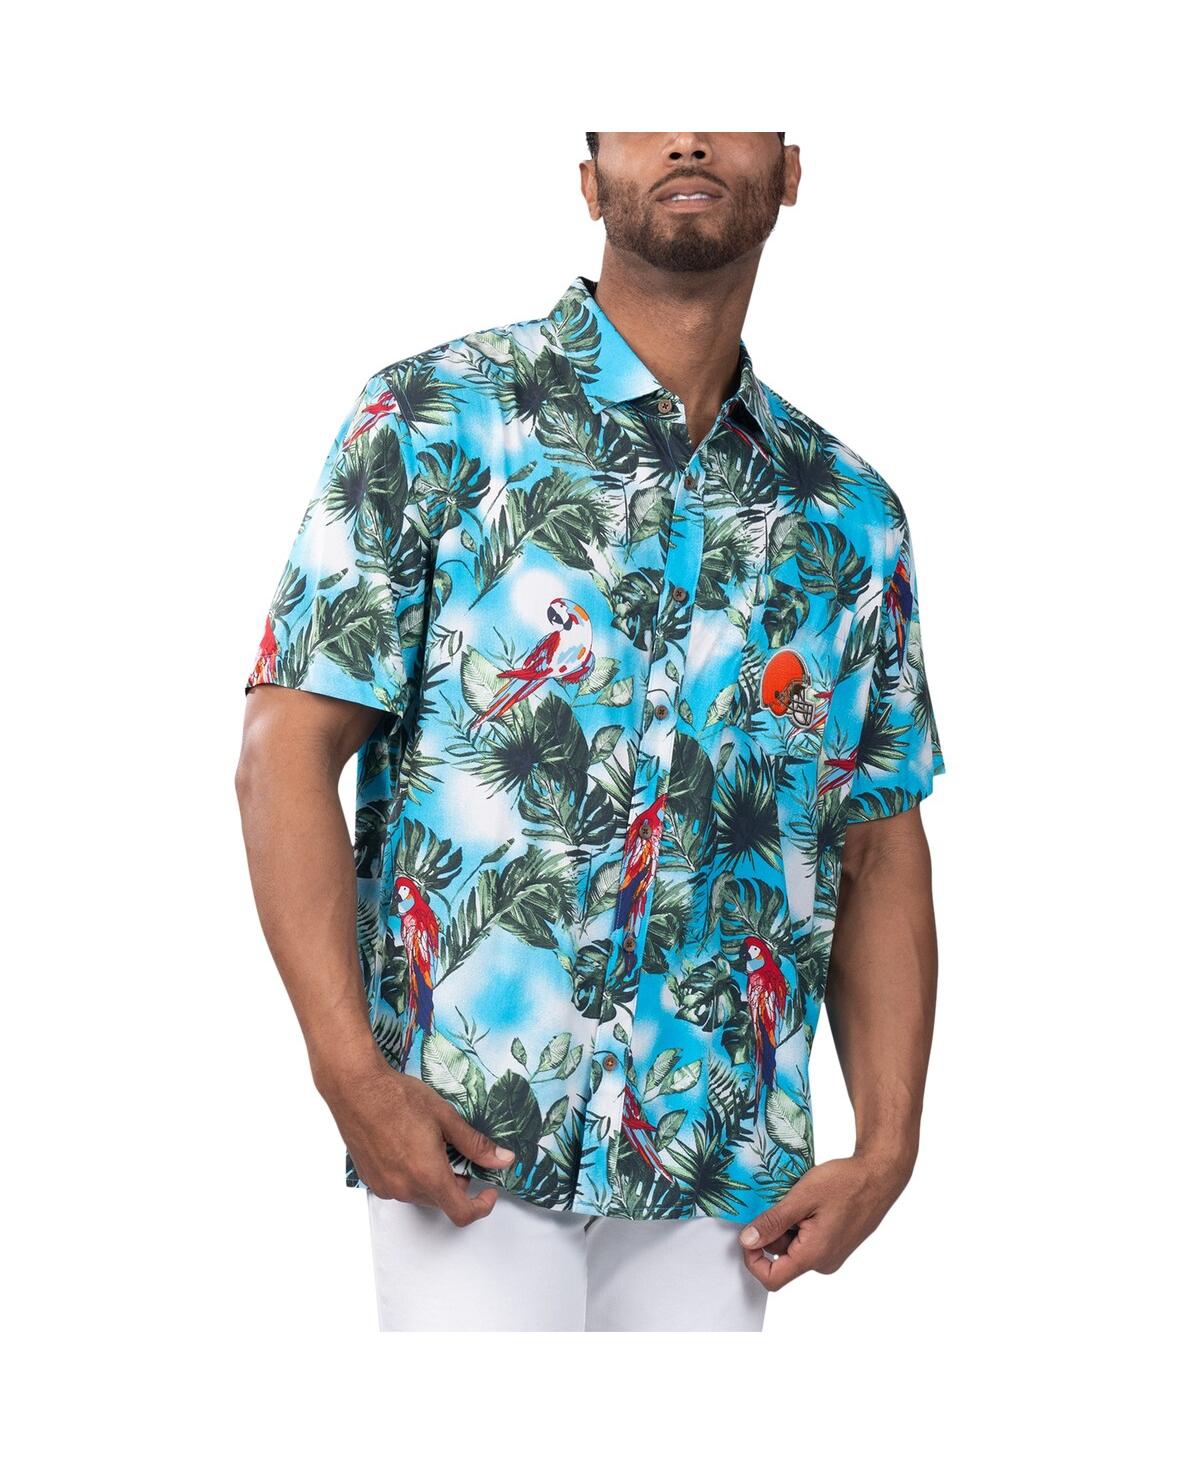 Men's Margaritaville Light Blue Cleveland Browns Jungle Parrot Party Button-Up Shirt - Light Blue